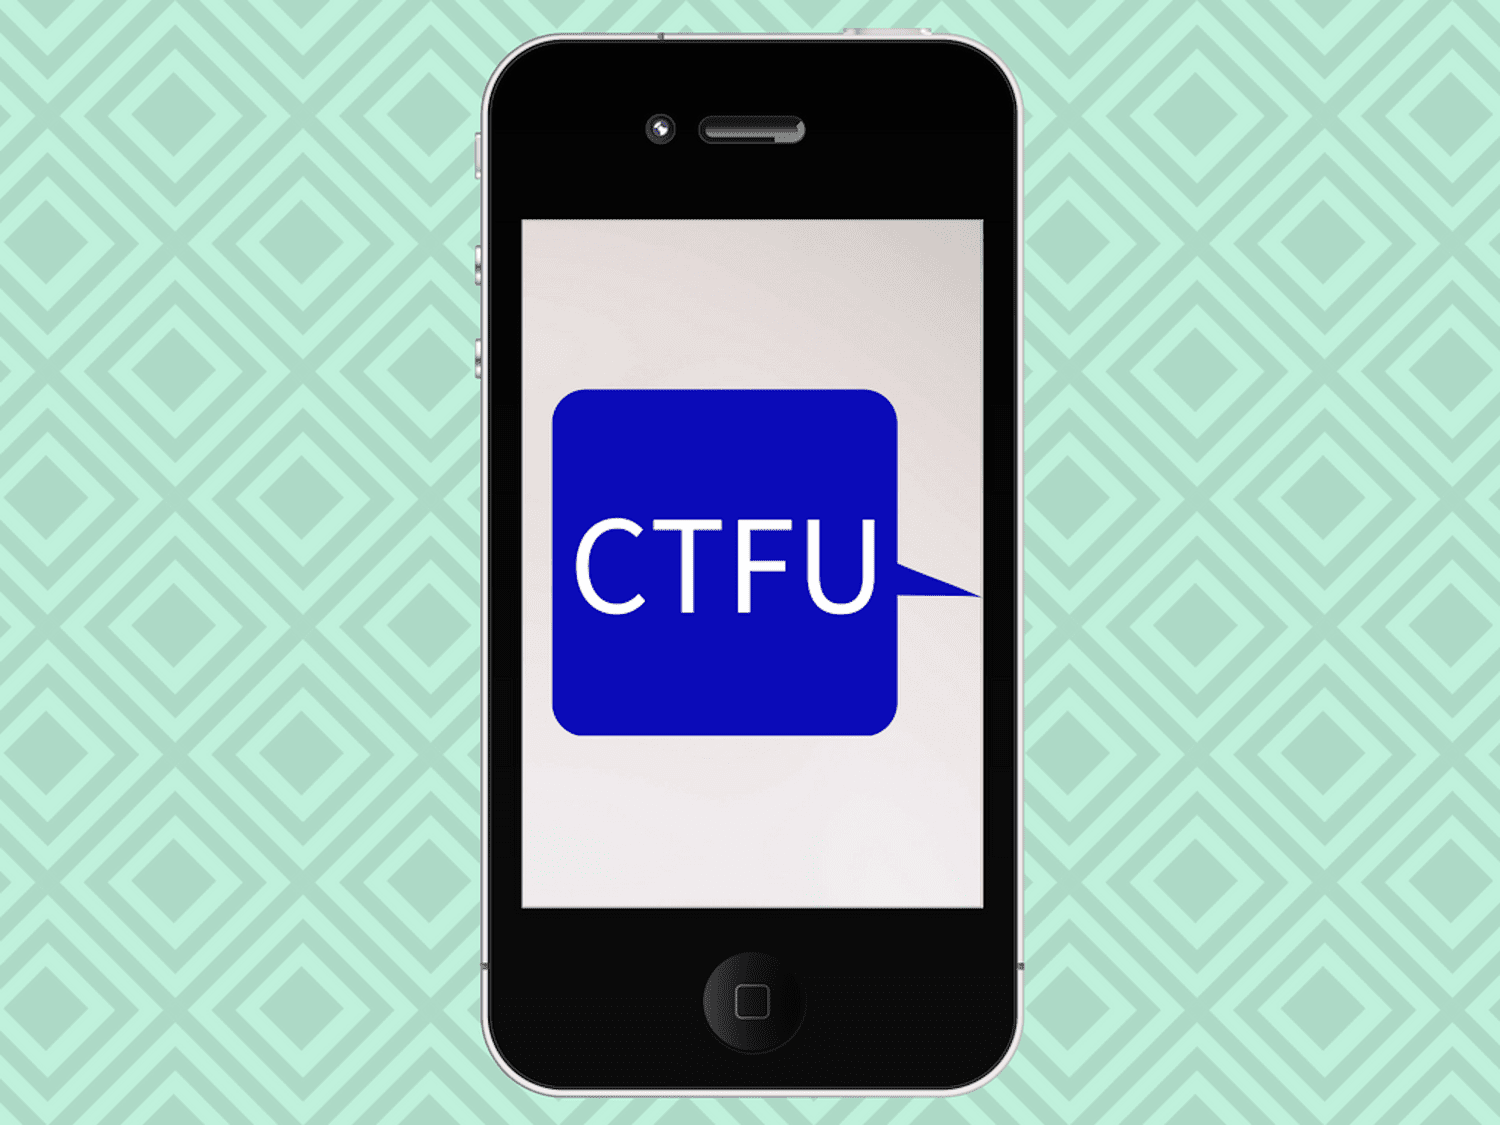 ctfu meaning